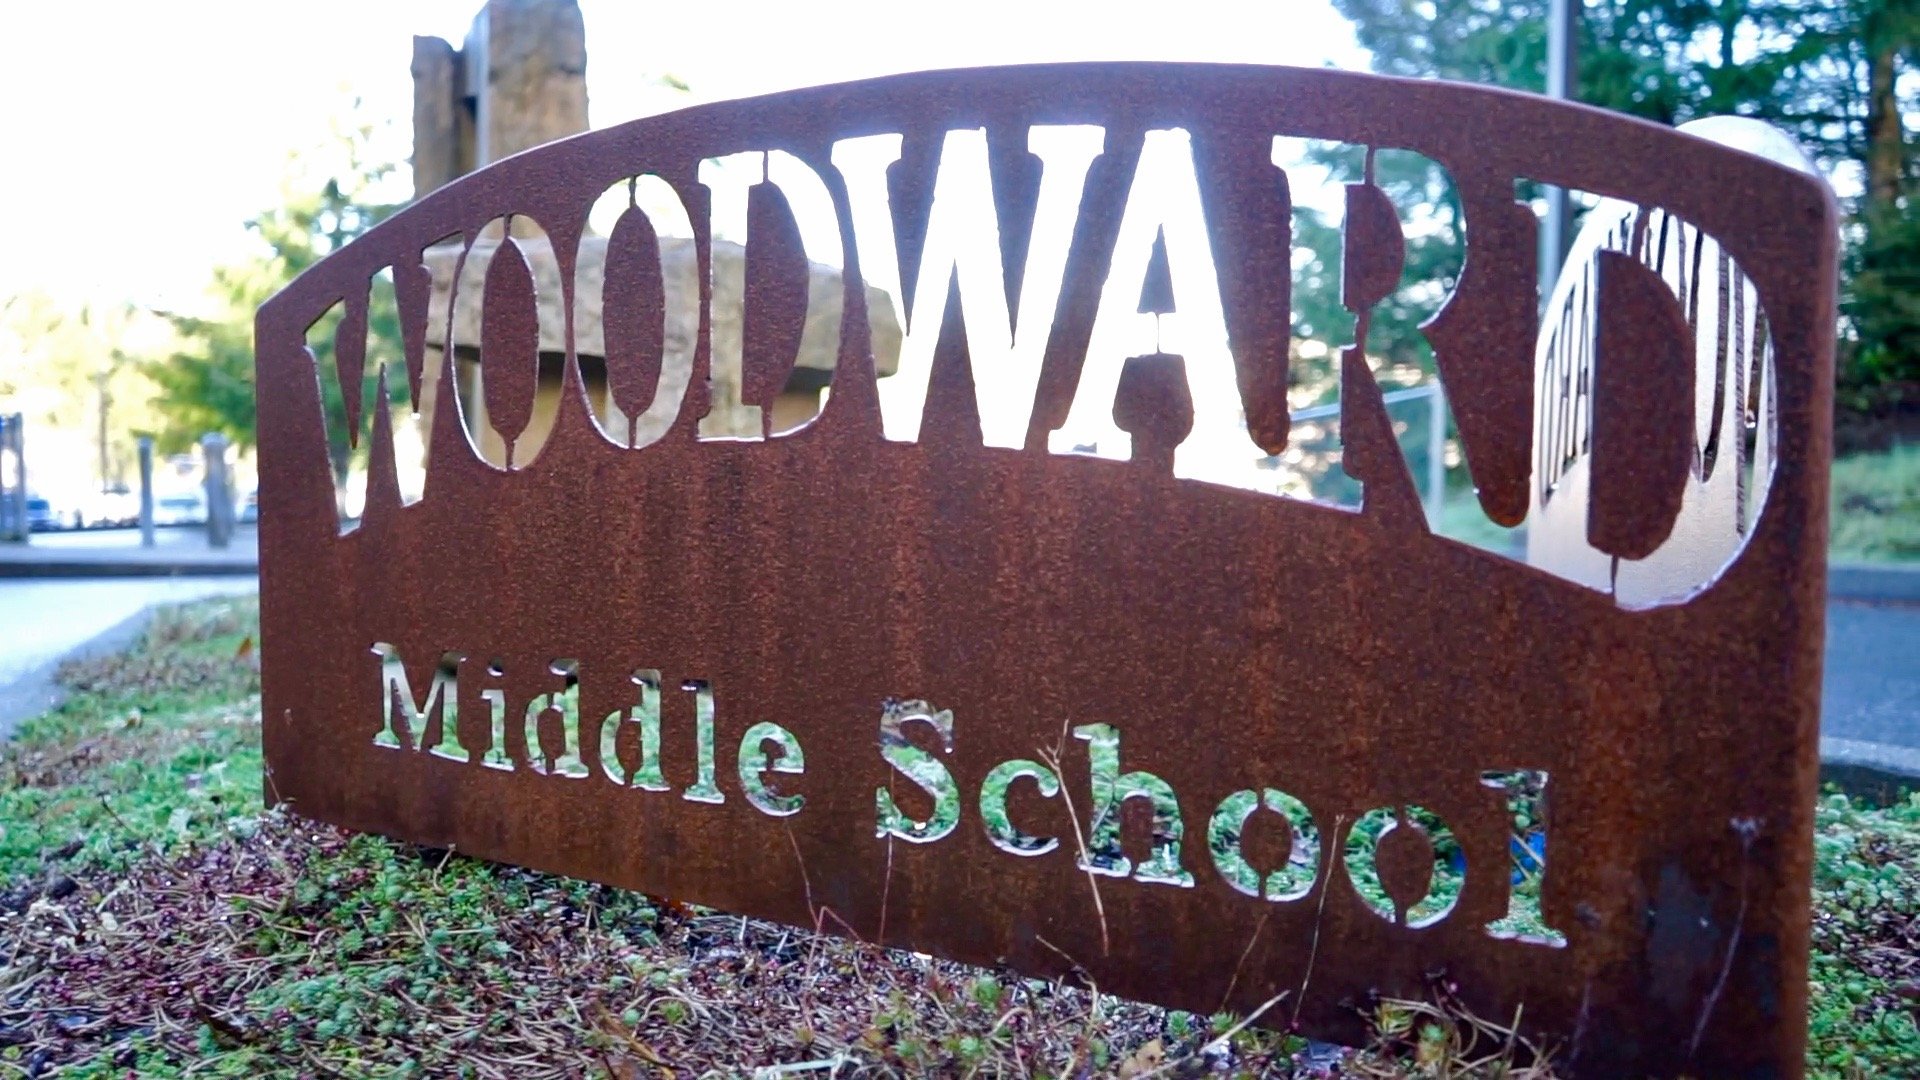 Woodward School.jpg